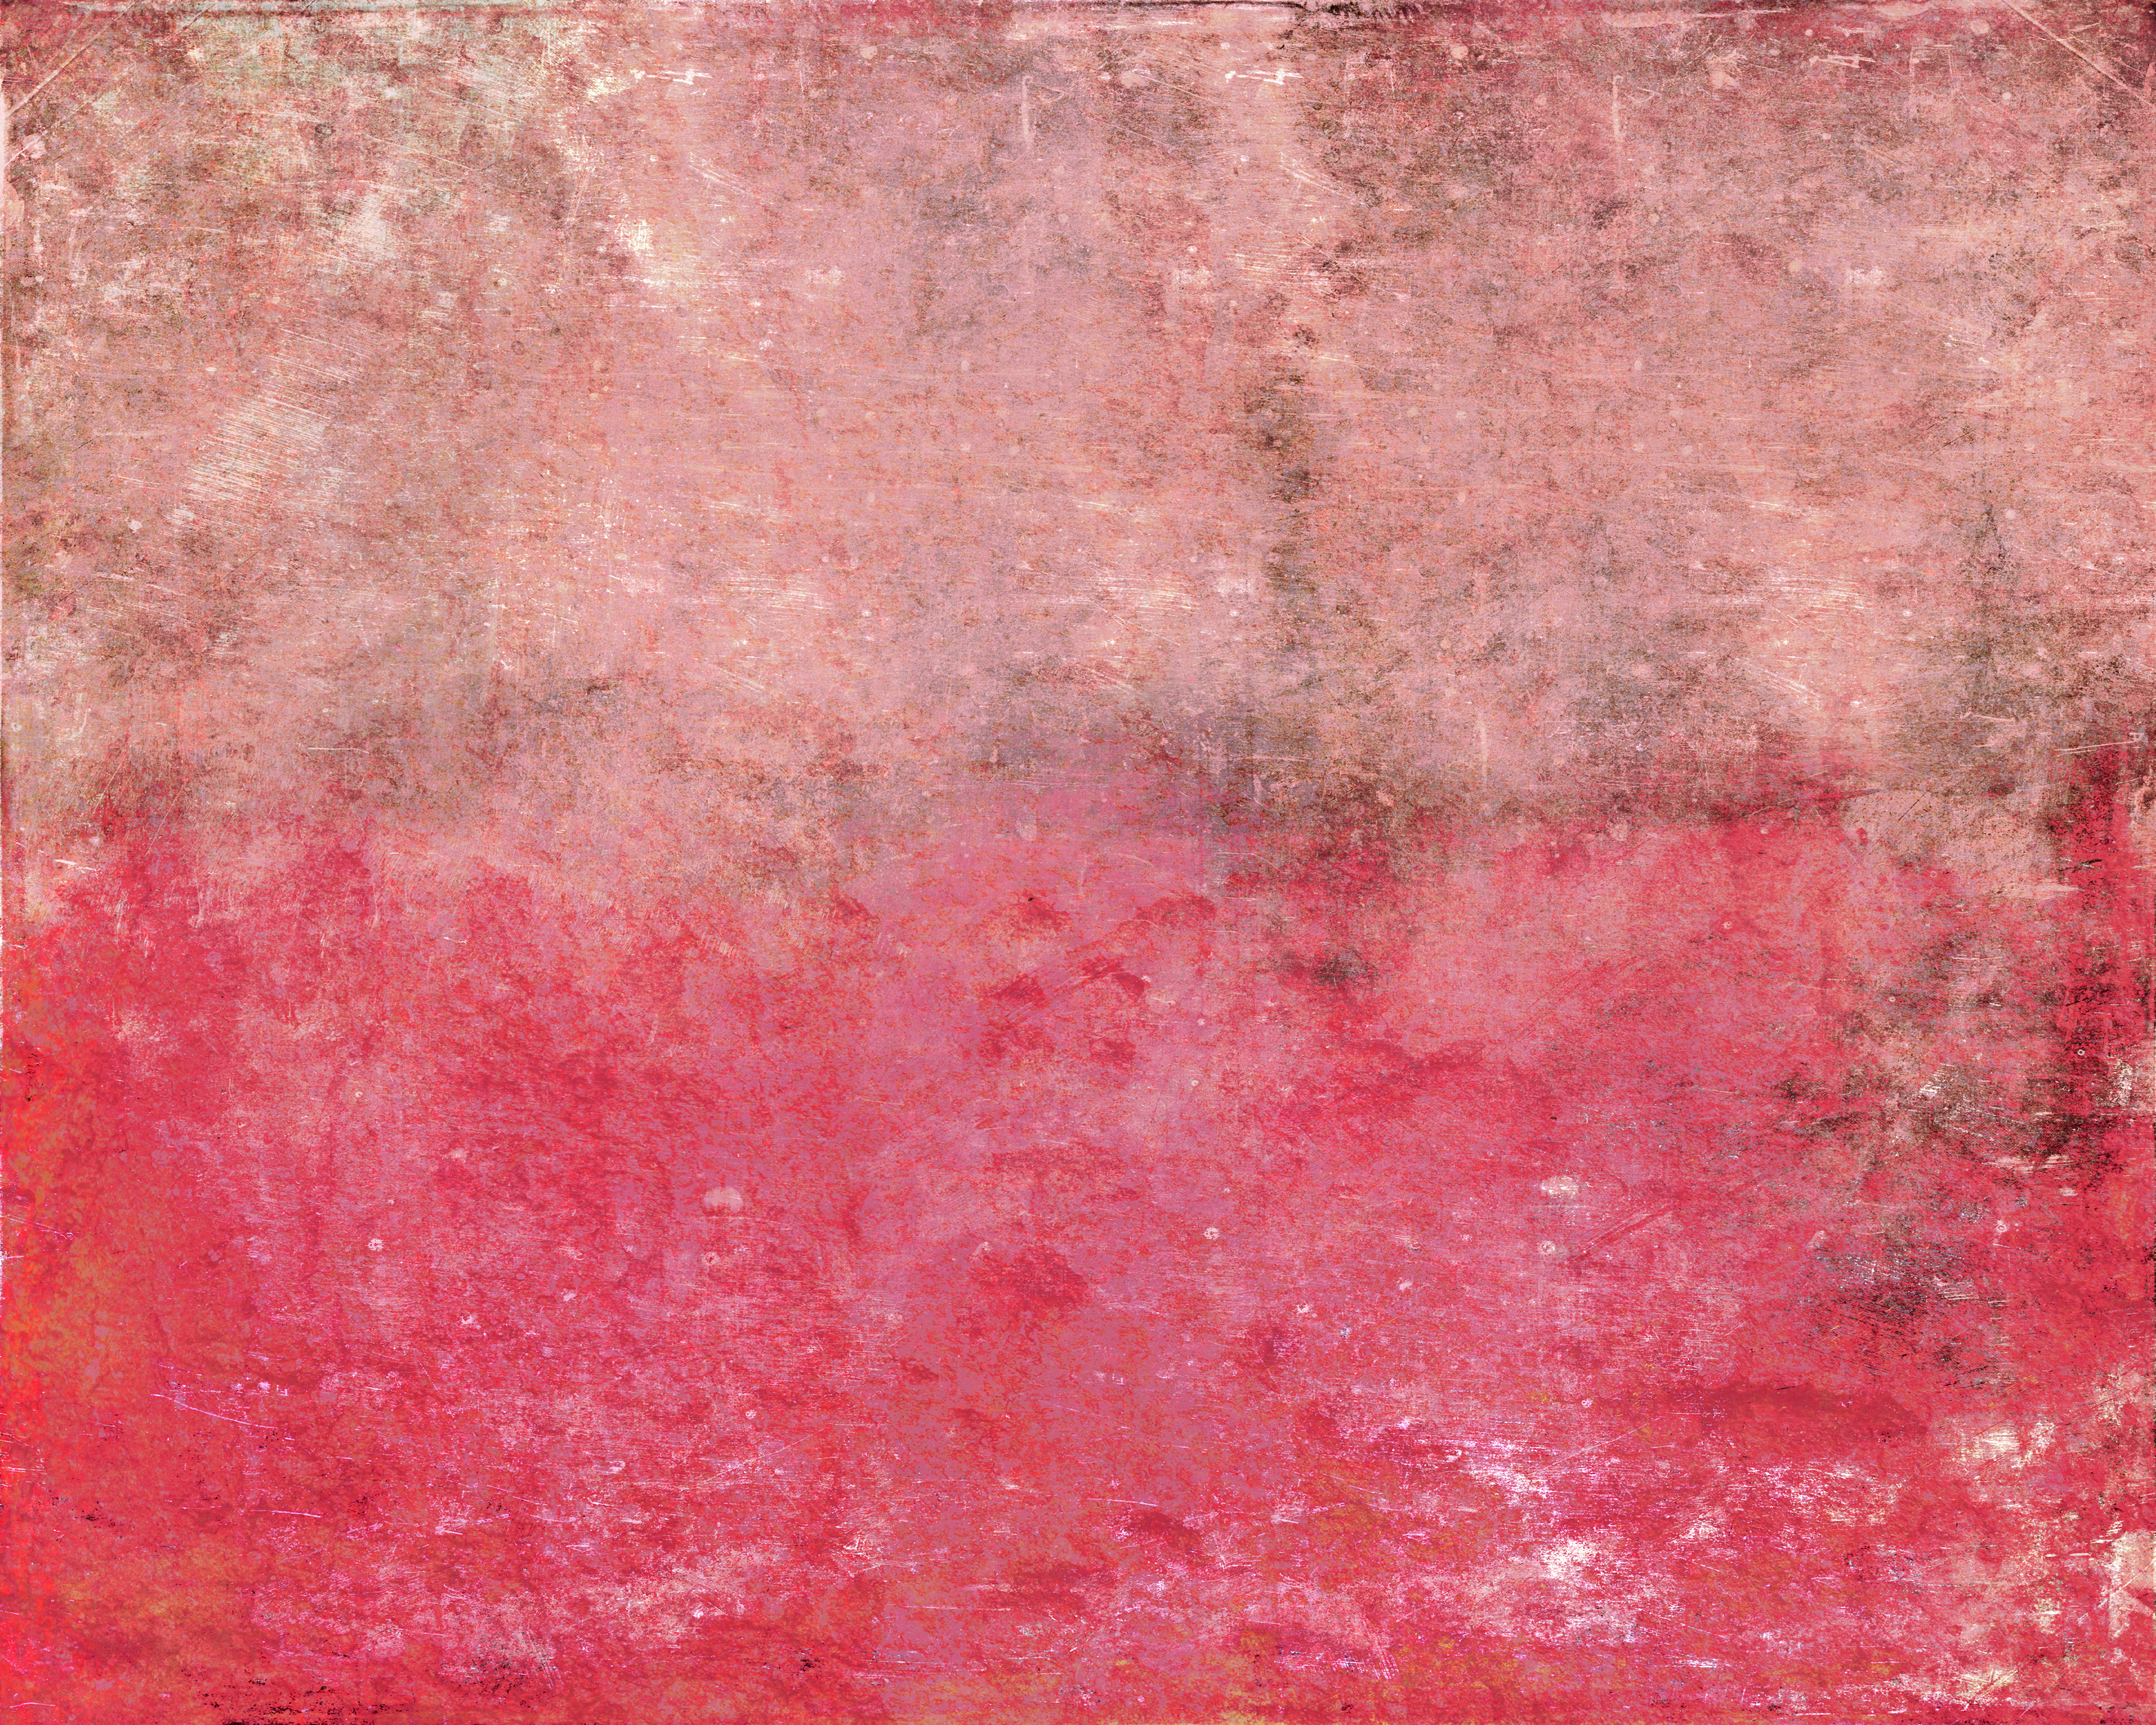 Origin Murals Grunge Distressed Effect Red Wall Mural - 3 x 2.4m